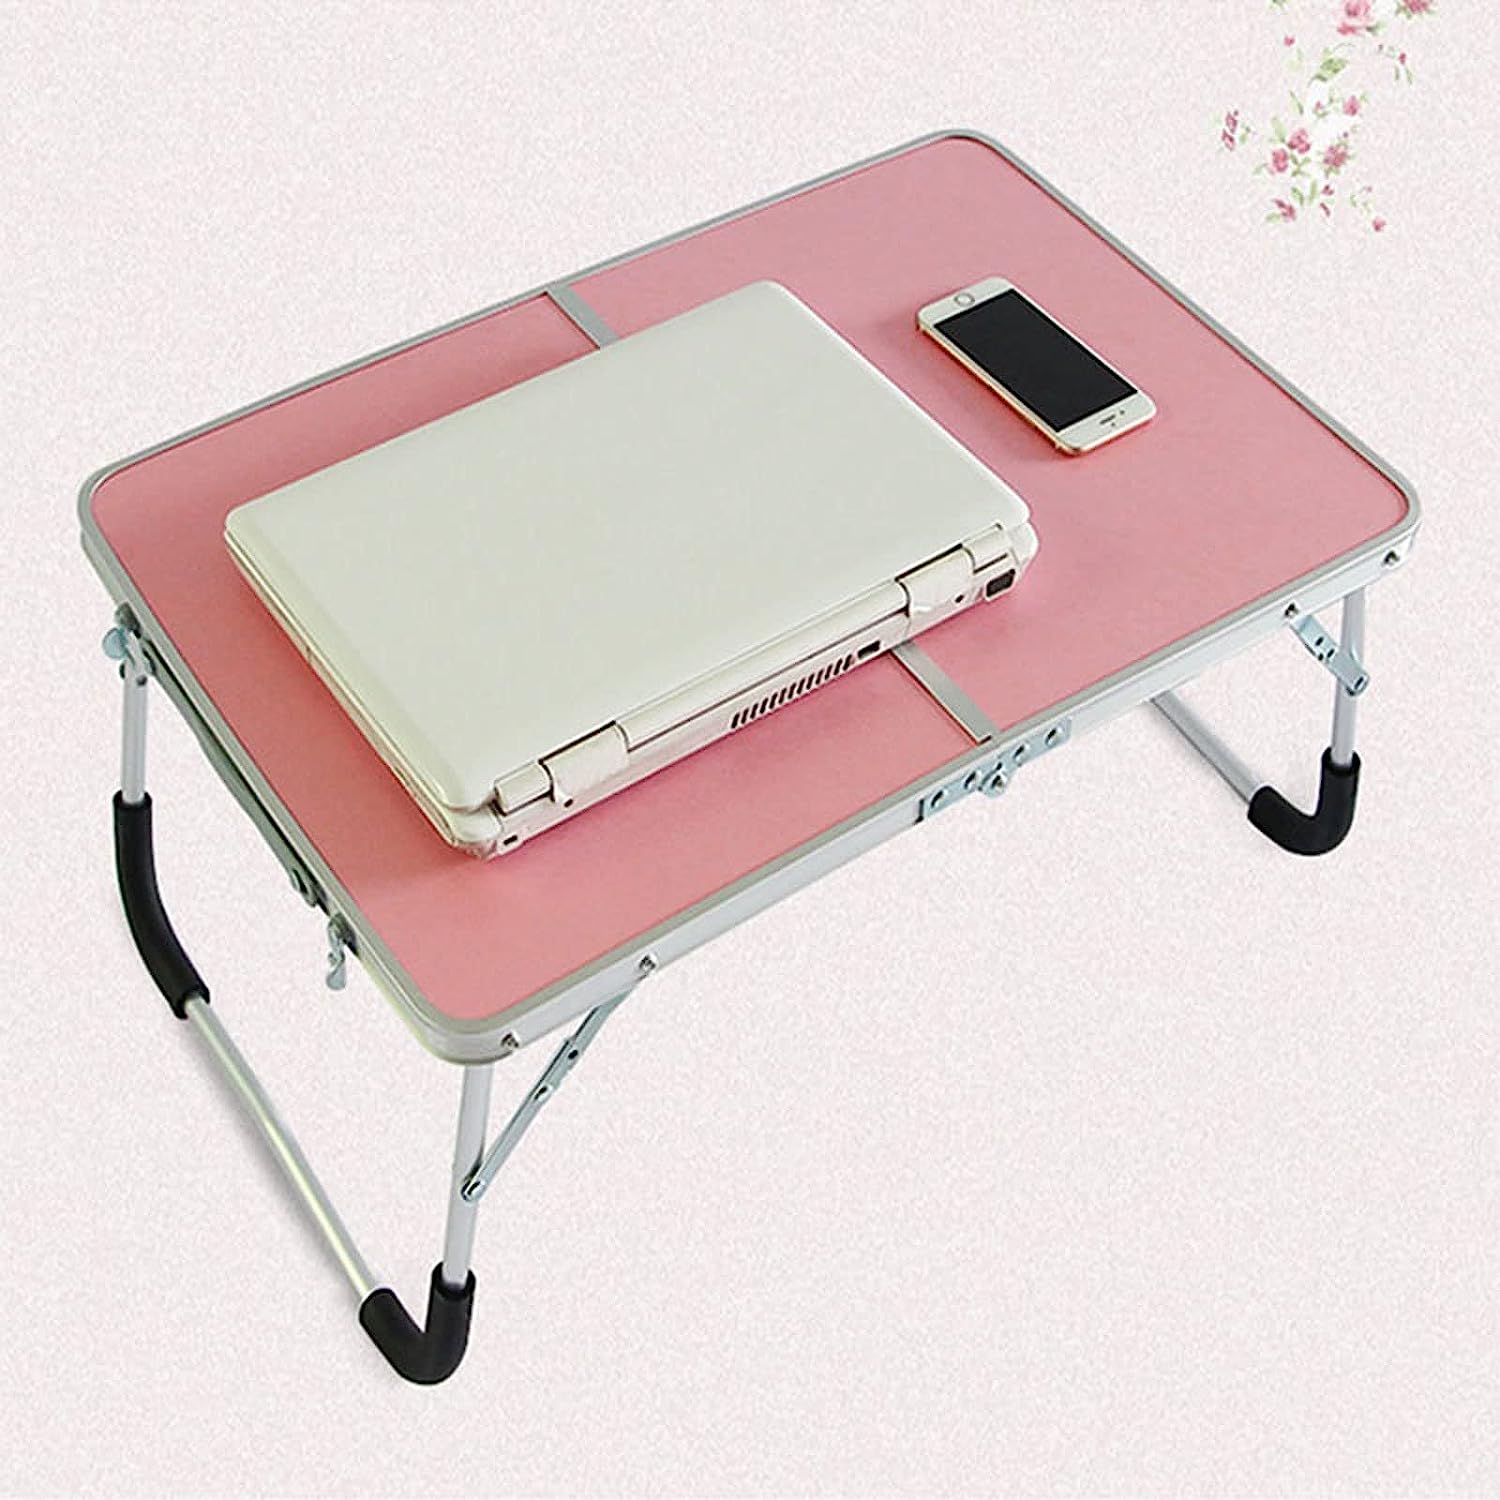 Portable Folding Mini Table, Laptop Study Coffee Tea Study Outdoor Camping Picnic Desk